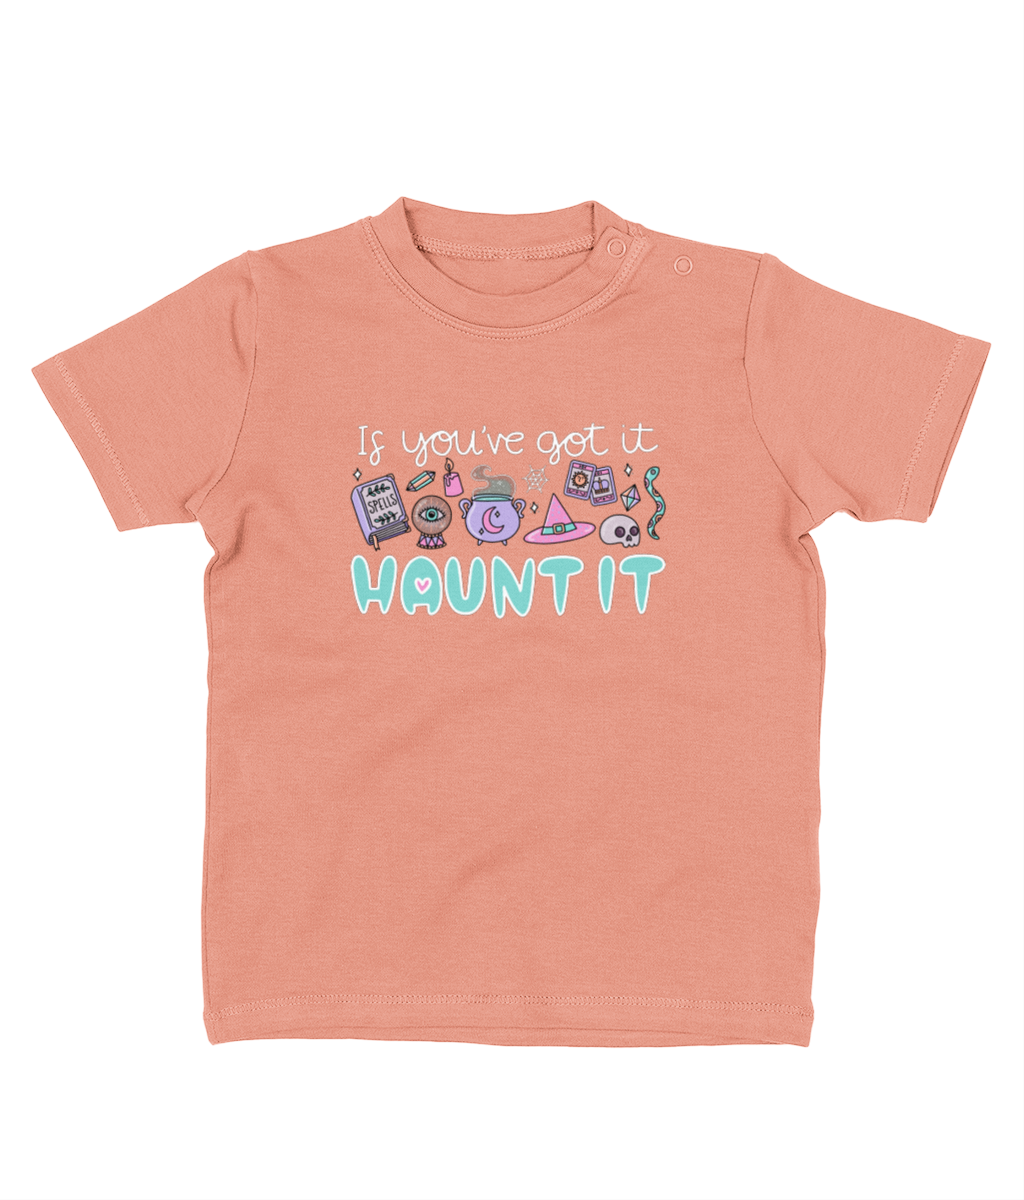 Spellbound Baby T-Shirt - If you've got it...haunt it